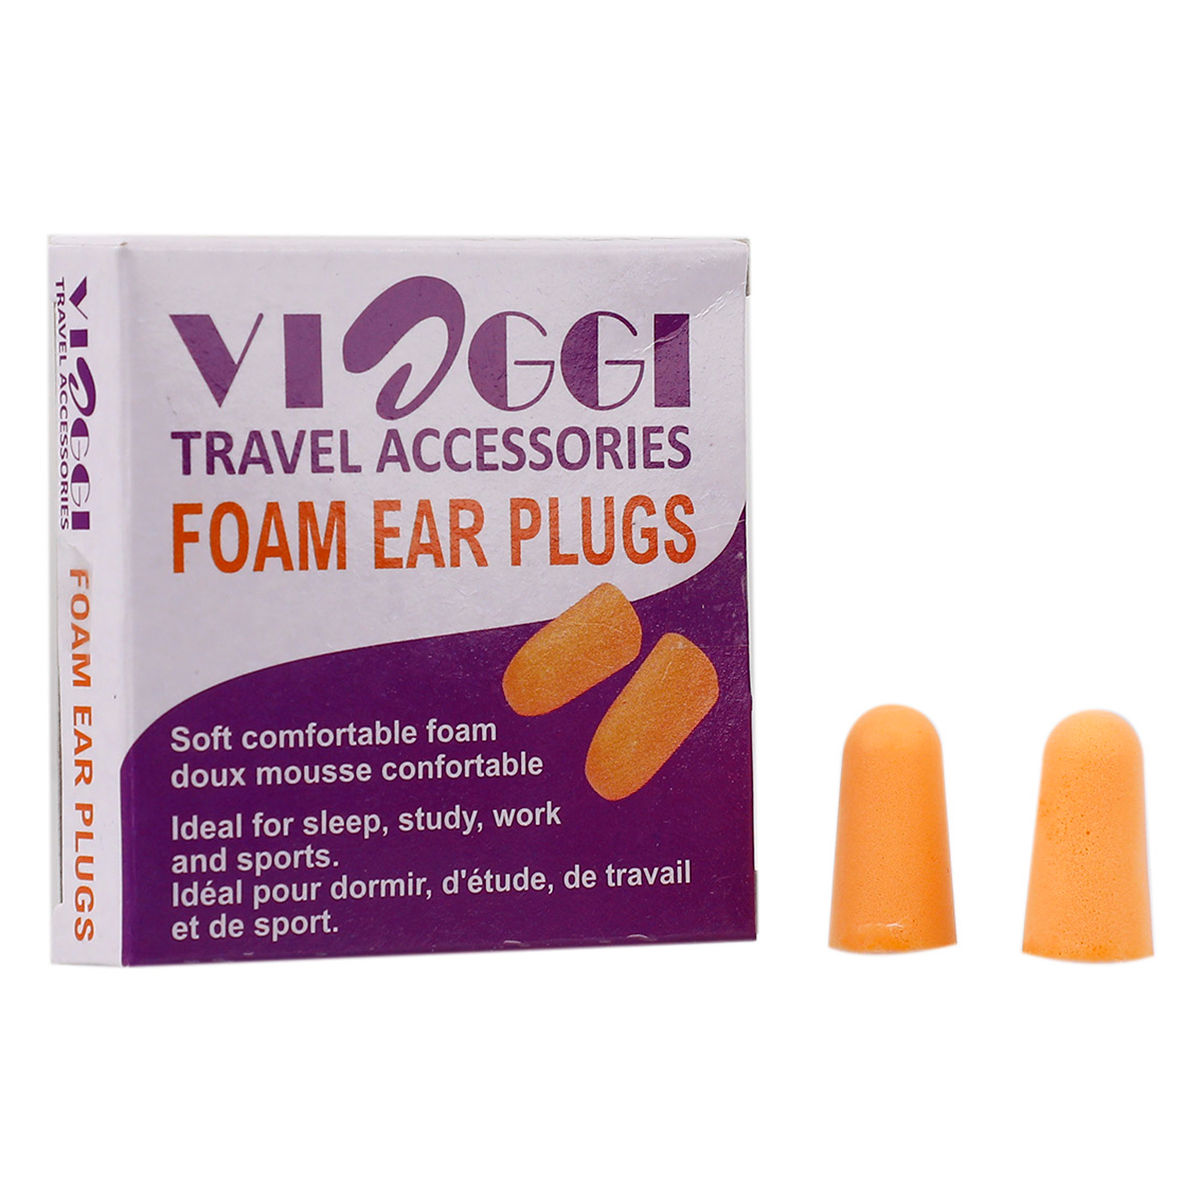 Buy Viaggi Foam Ear Plugs, 2 Pairs Online